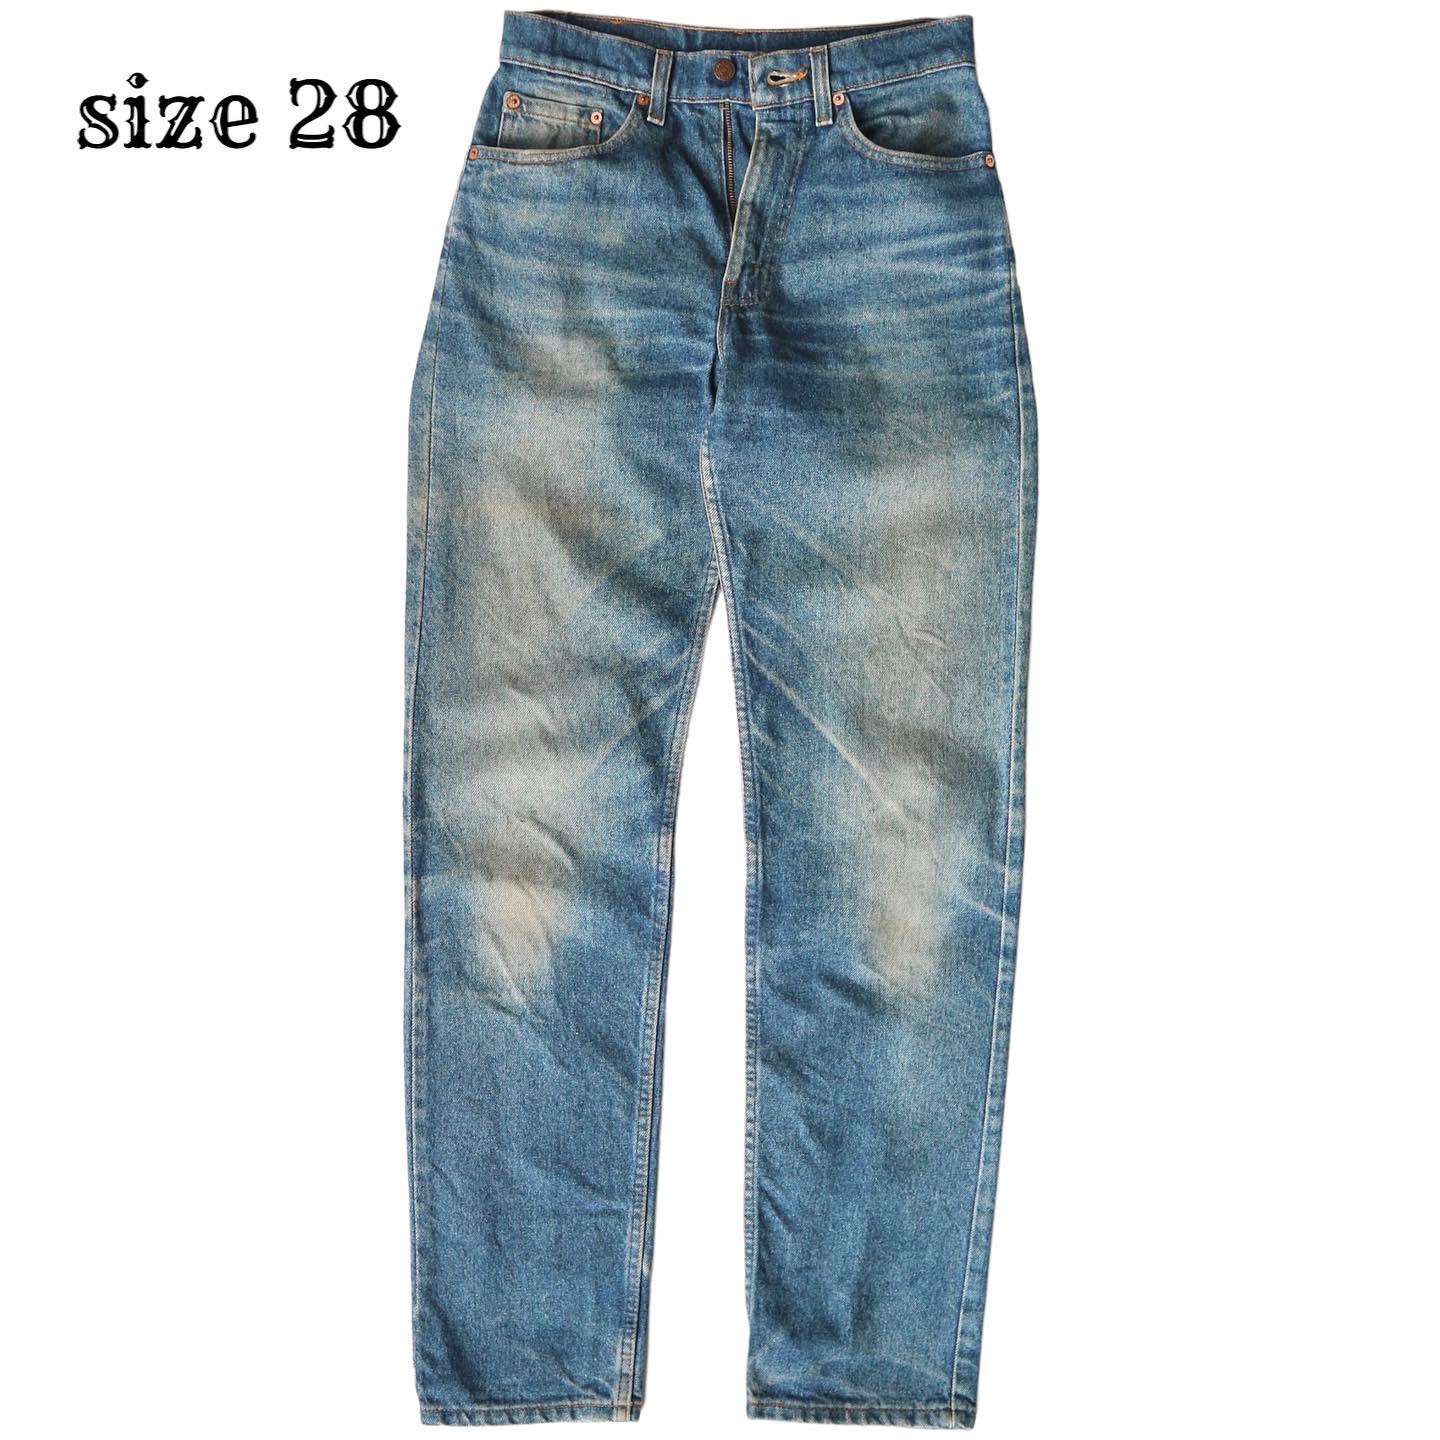 90s Levi's 510 Jeans Size 27/28 denimister